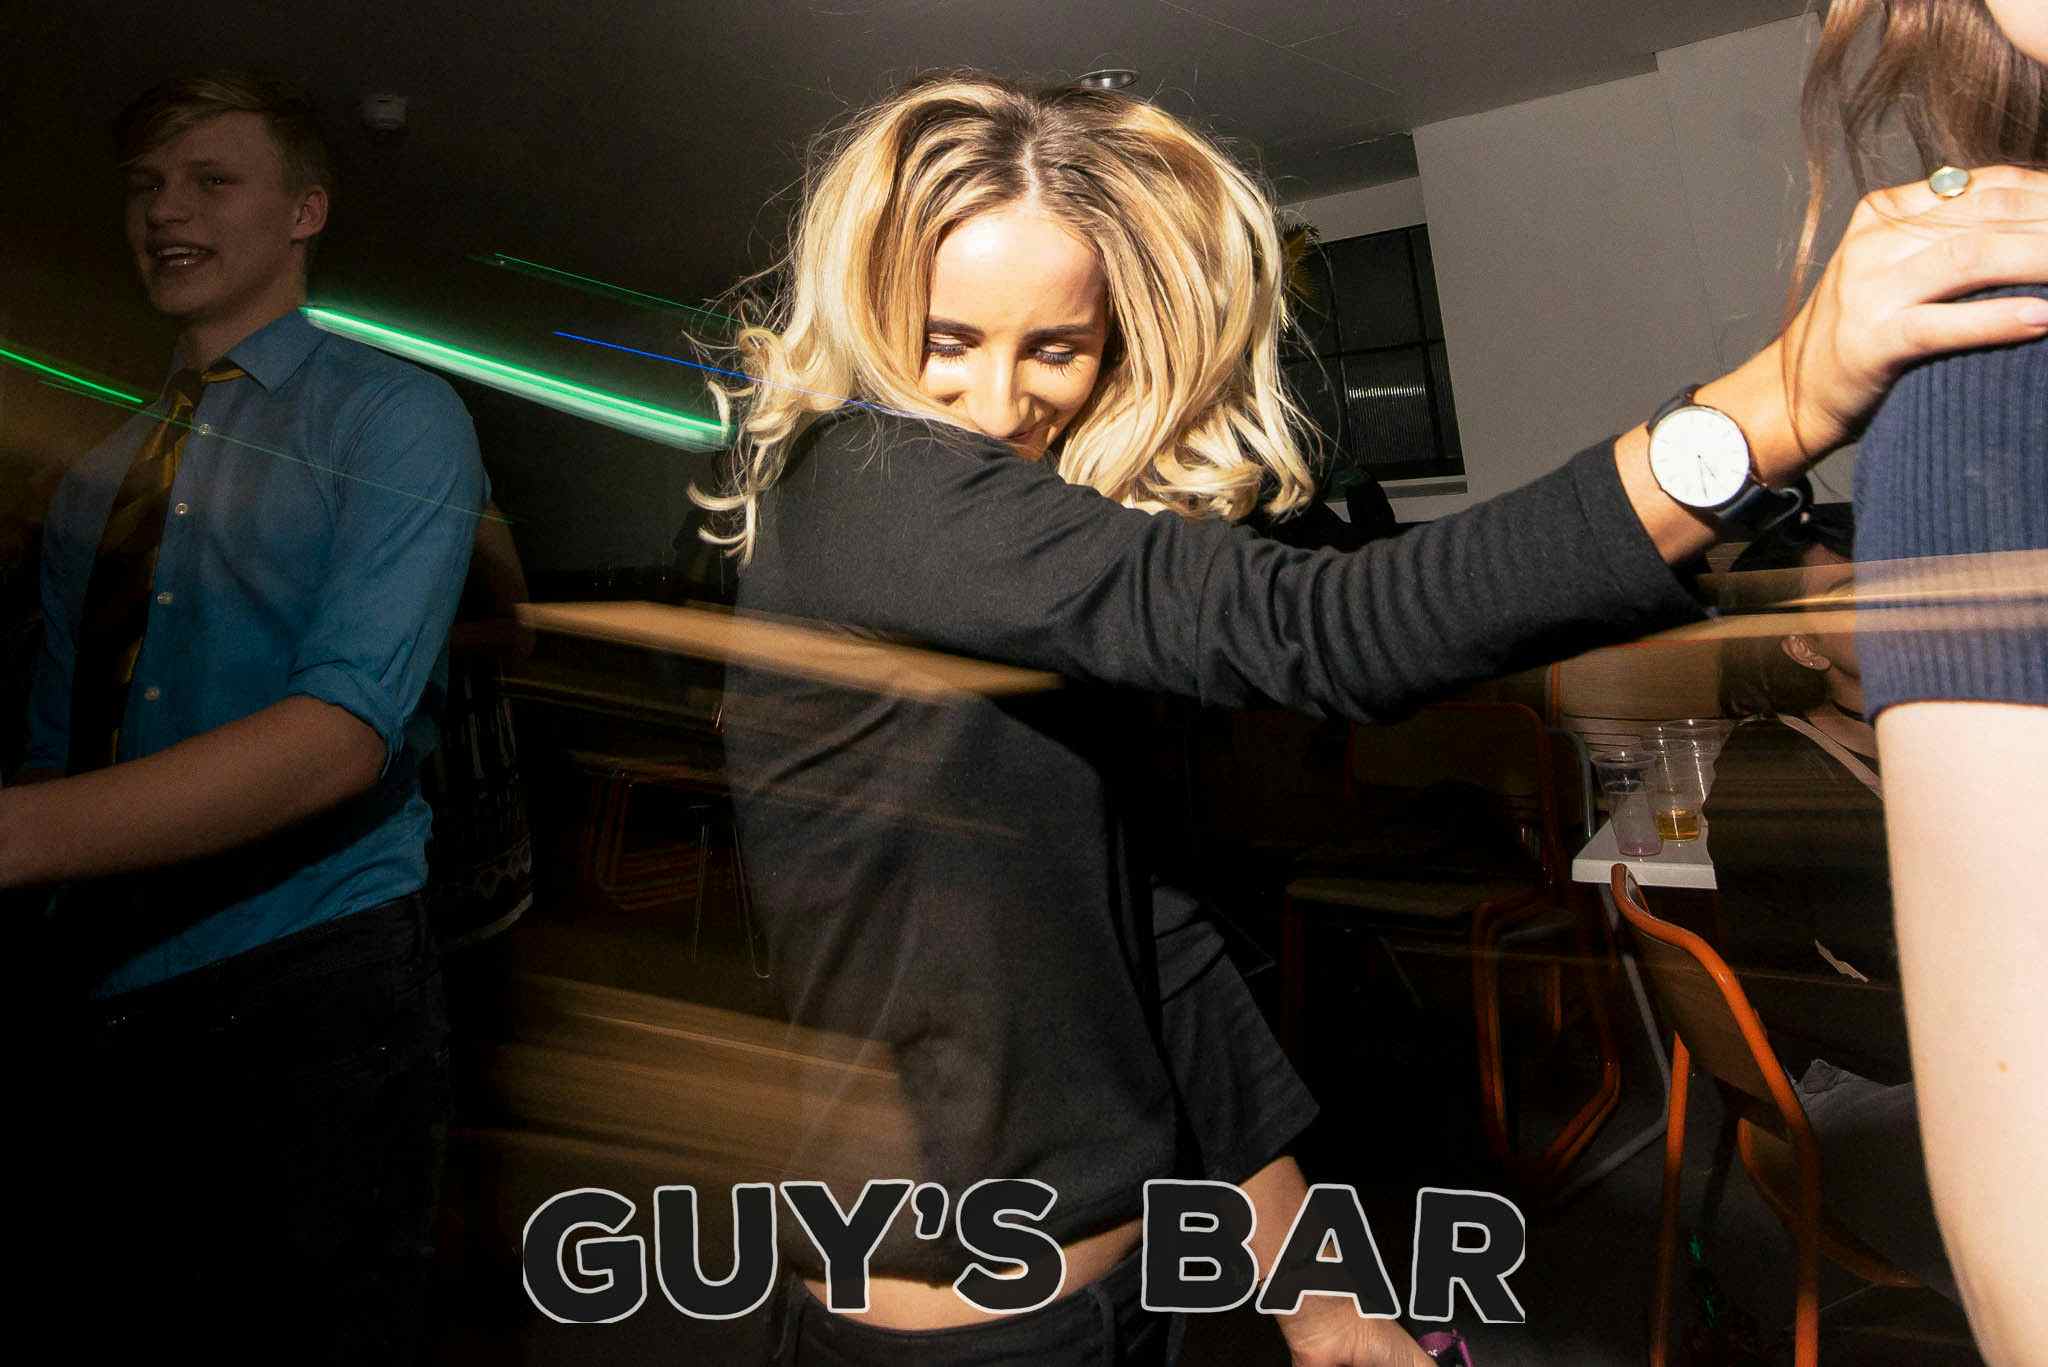 Guy's Bar, The Guy's Bar